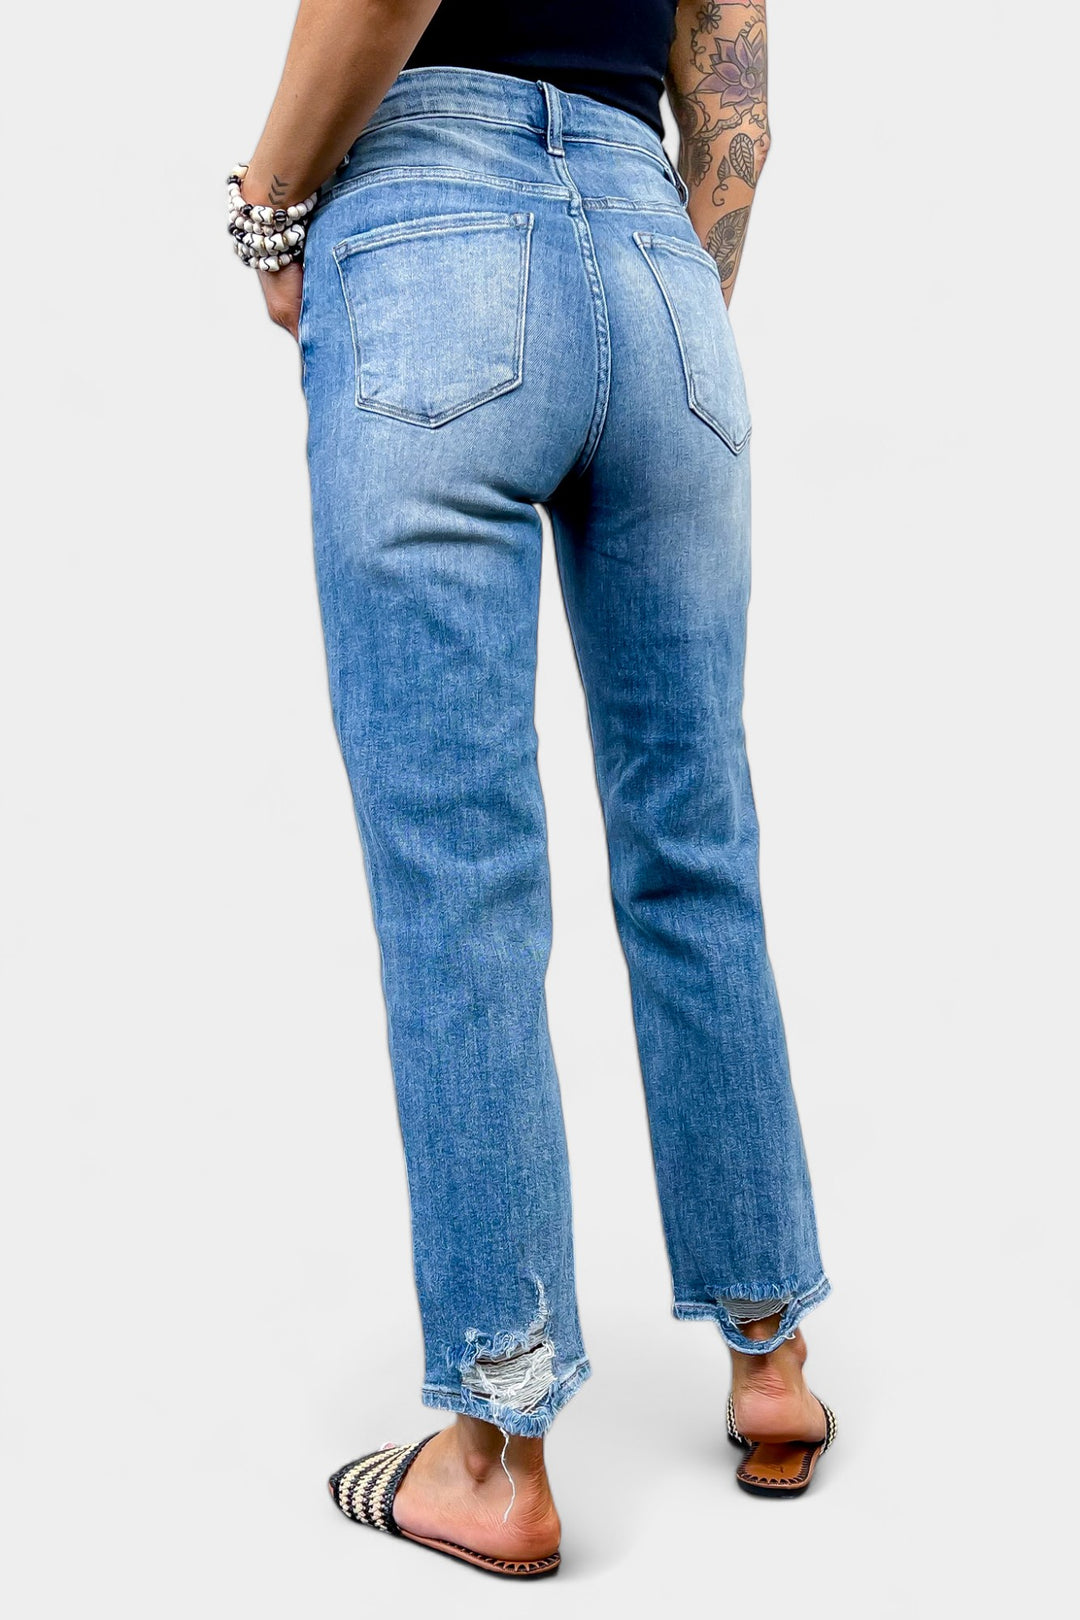 Risen RDP5099M Jeans